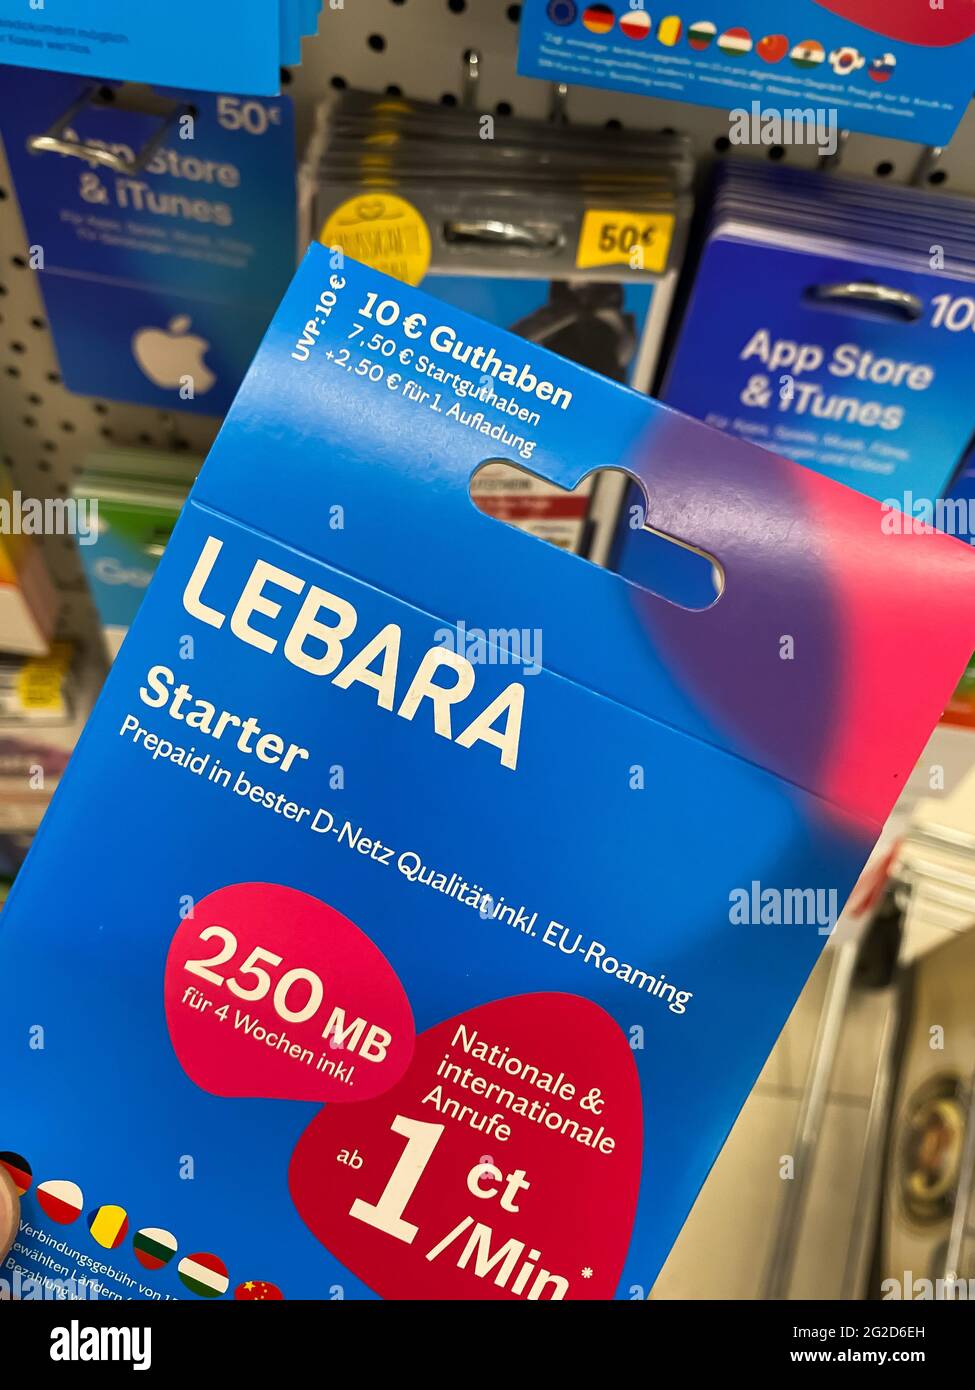 Viersen, Germany - May 9. 2021: Closeup of lebara prepaid card voucher in german supermarket Stock Photo